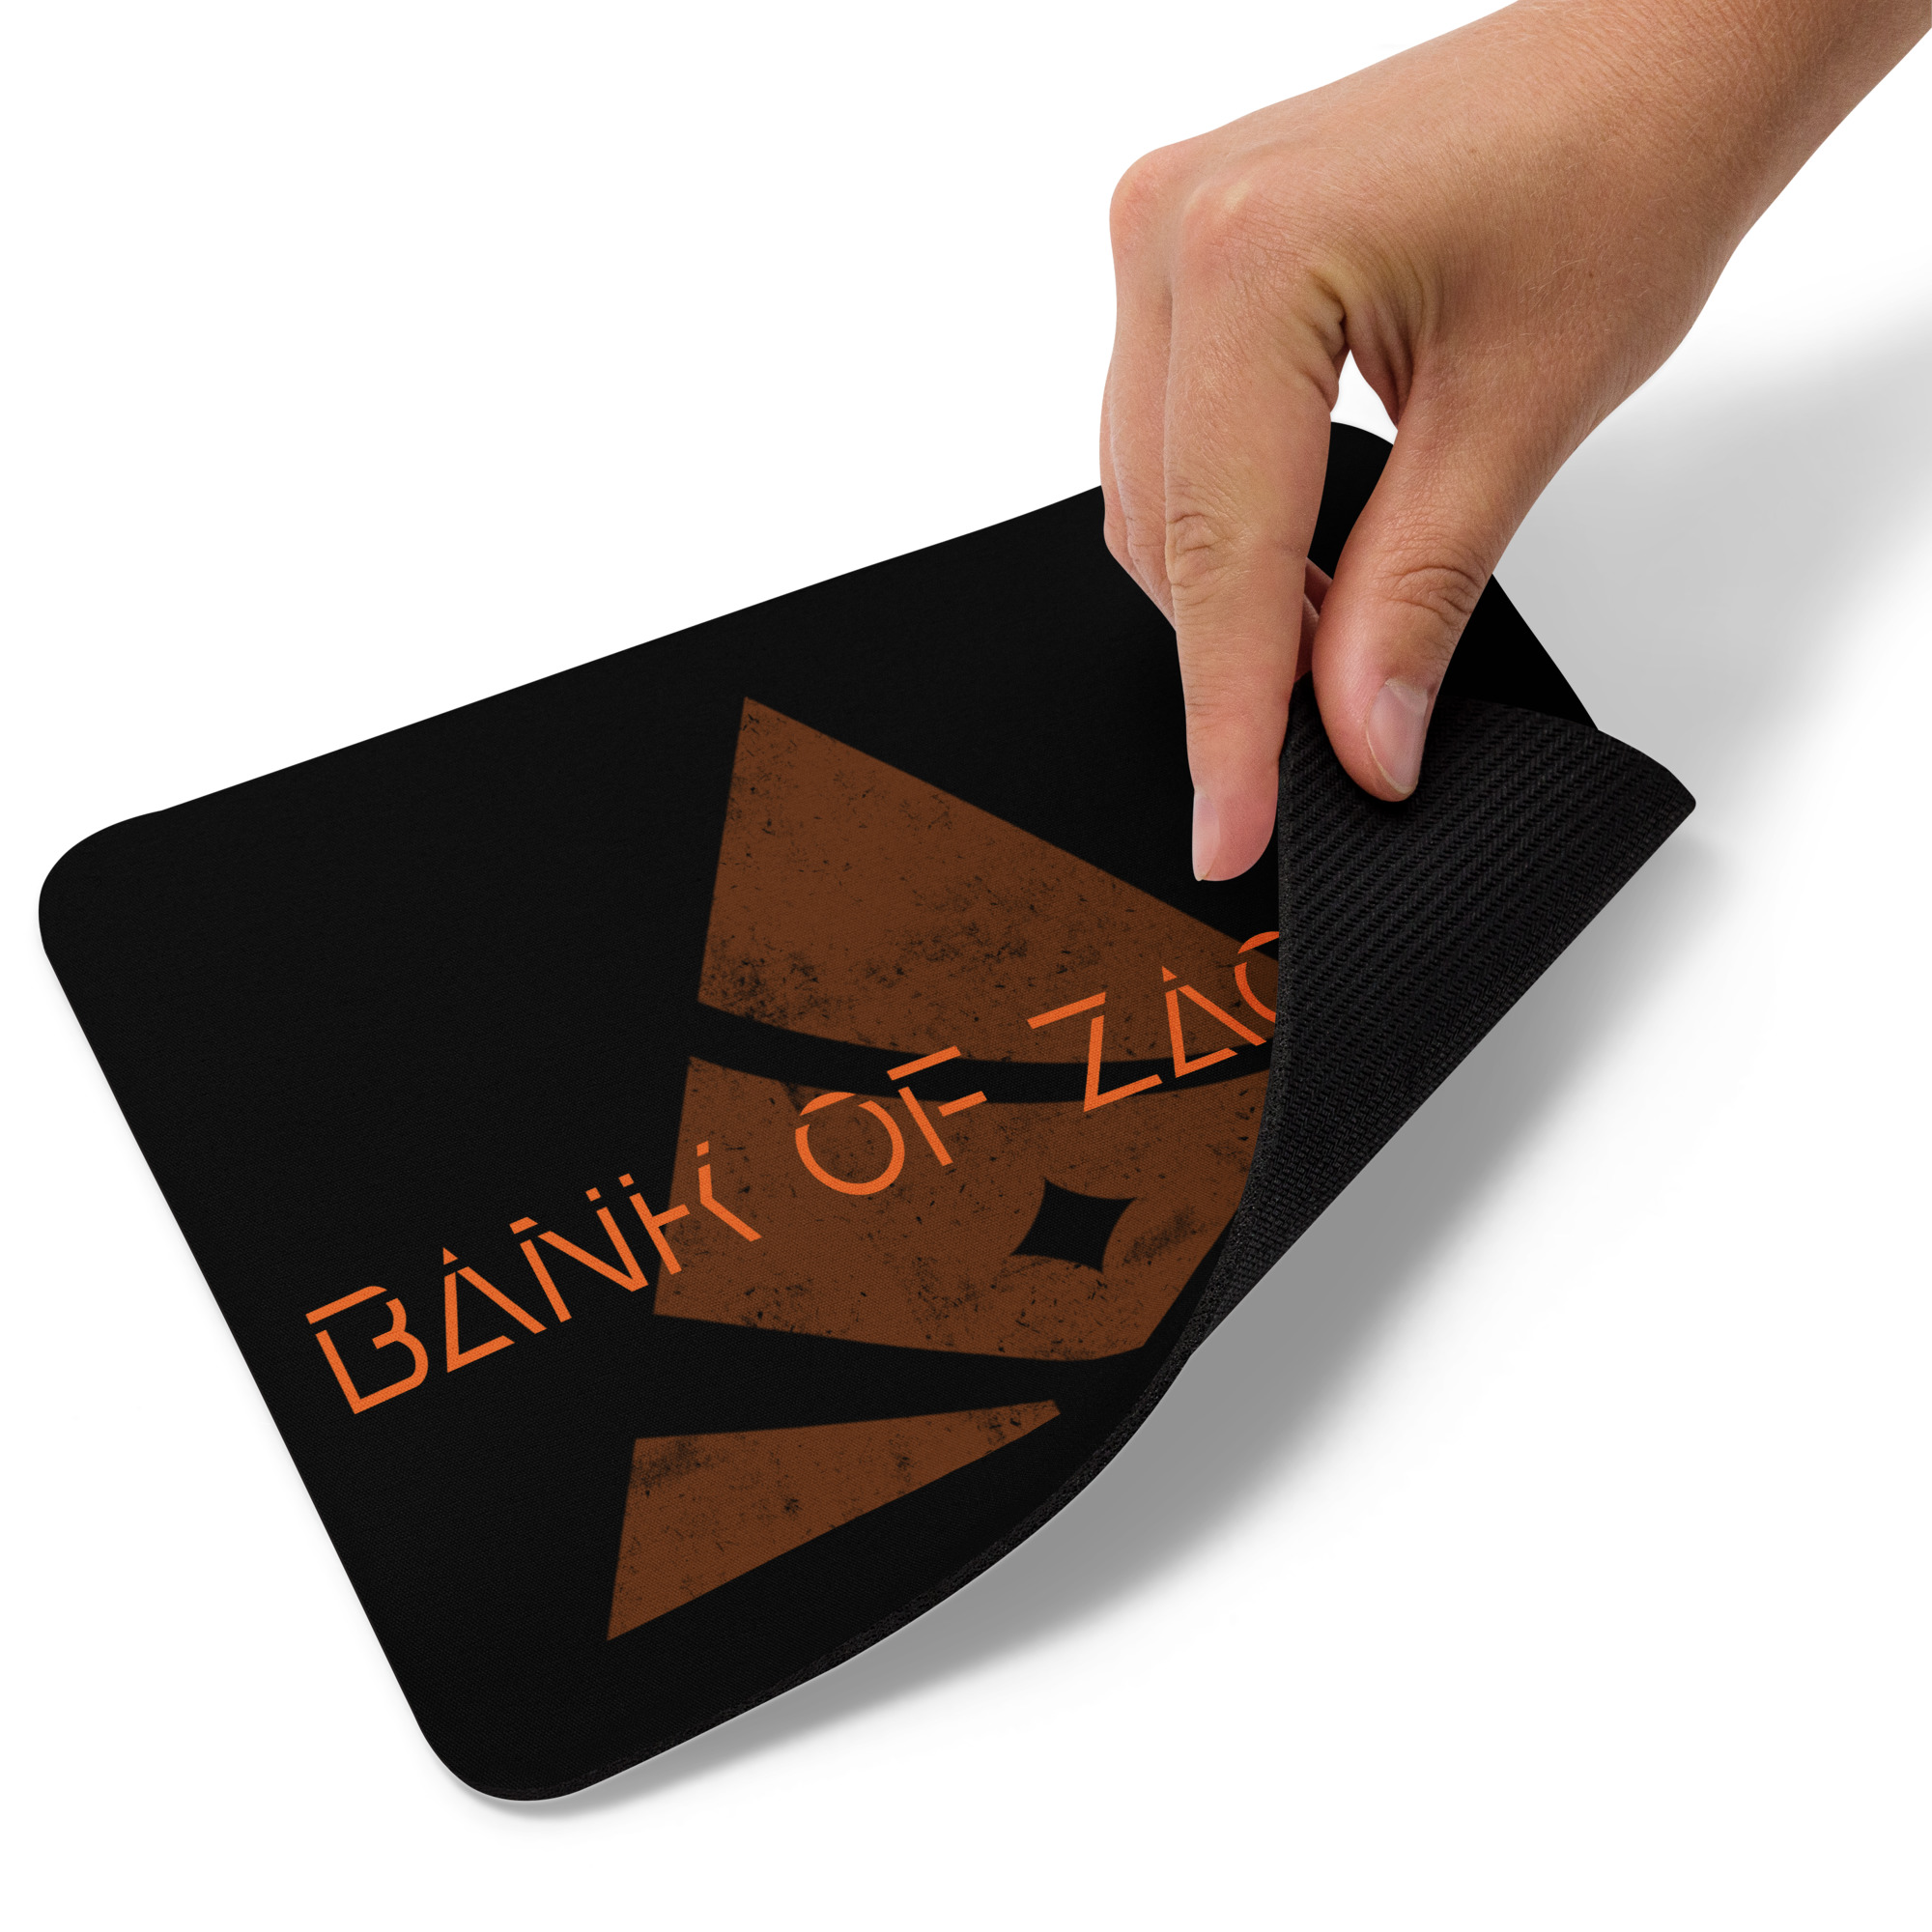 Black mousepad with Bank of Zaonce logo in orange hand pulling up corner